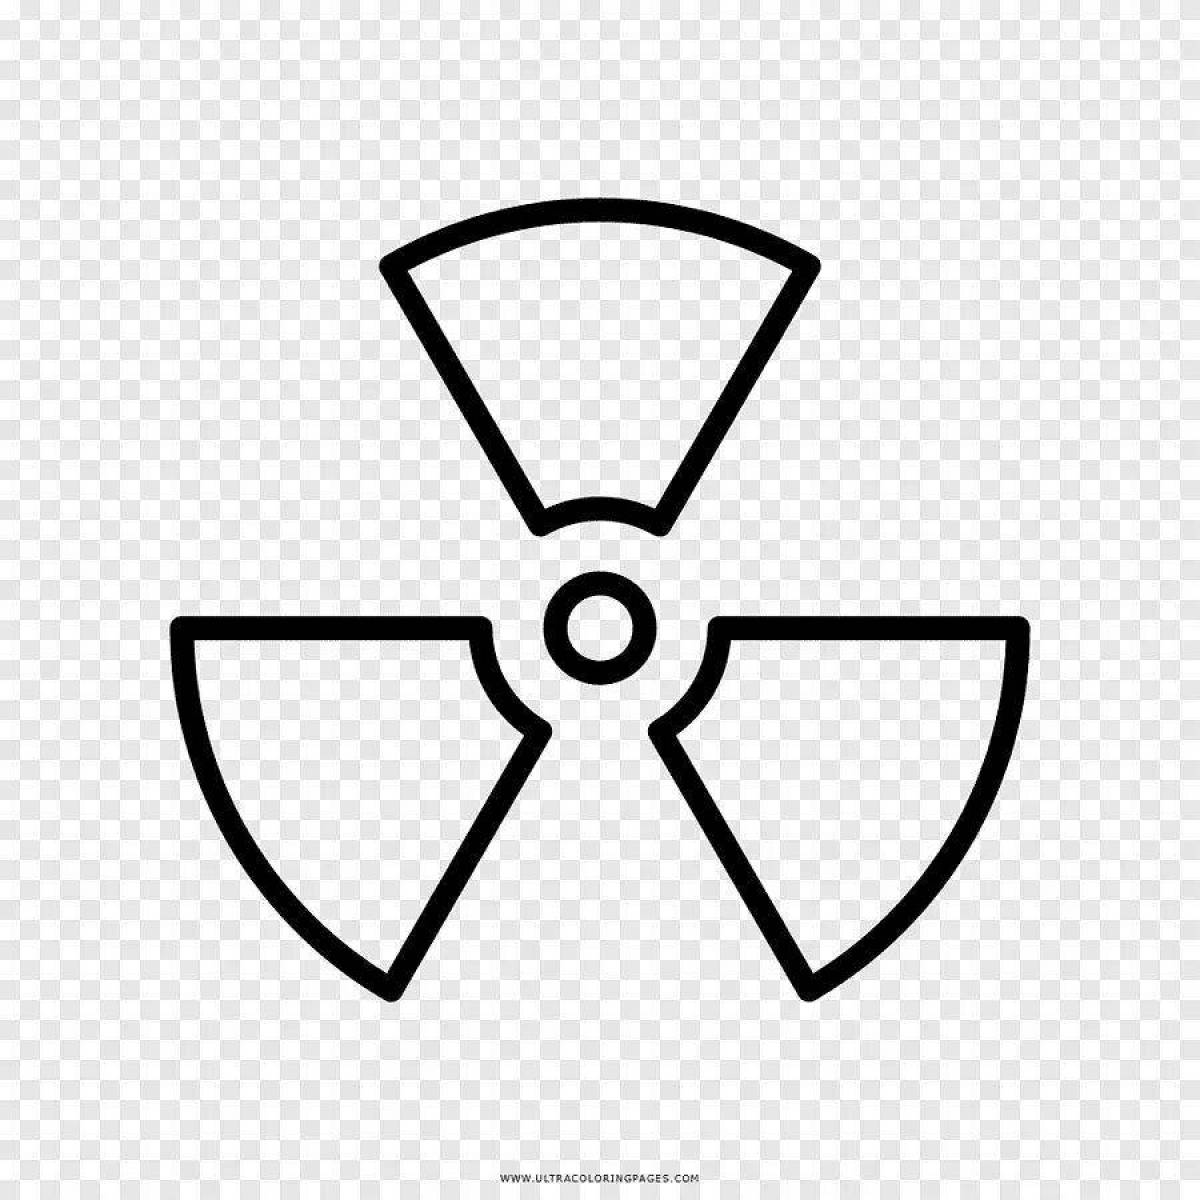 Unique radiation sign coloring page